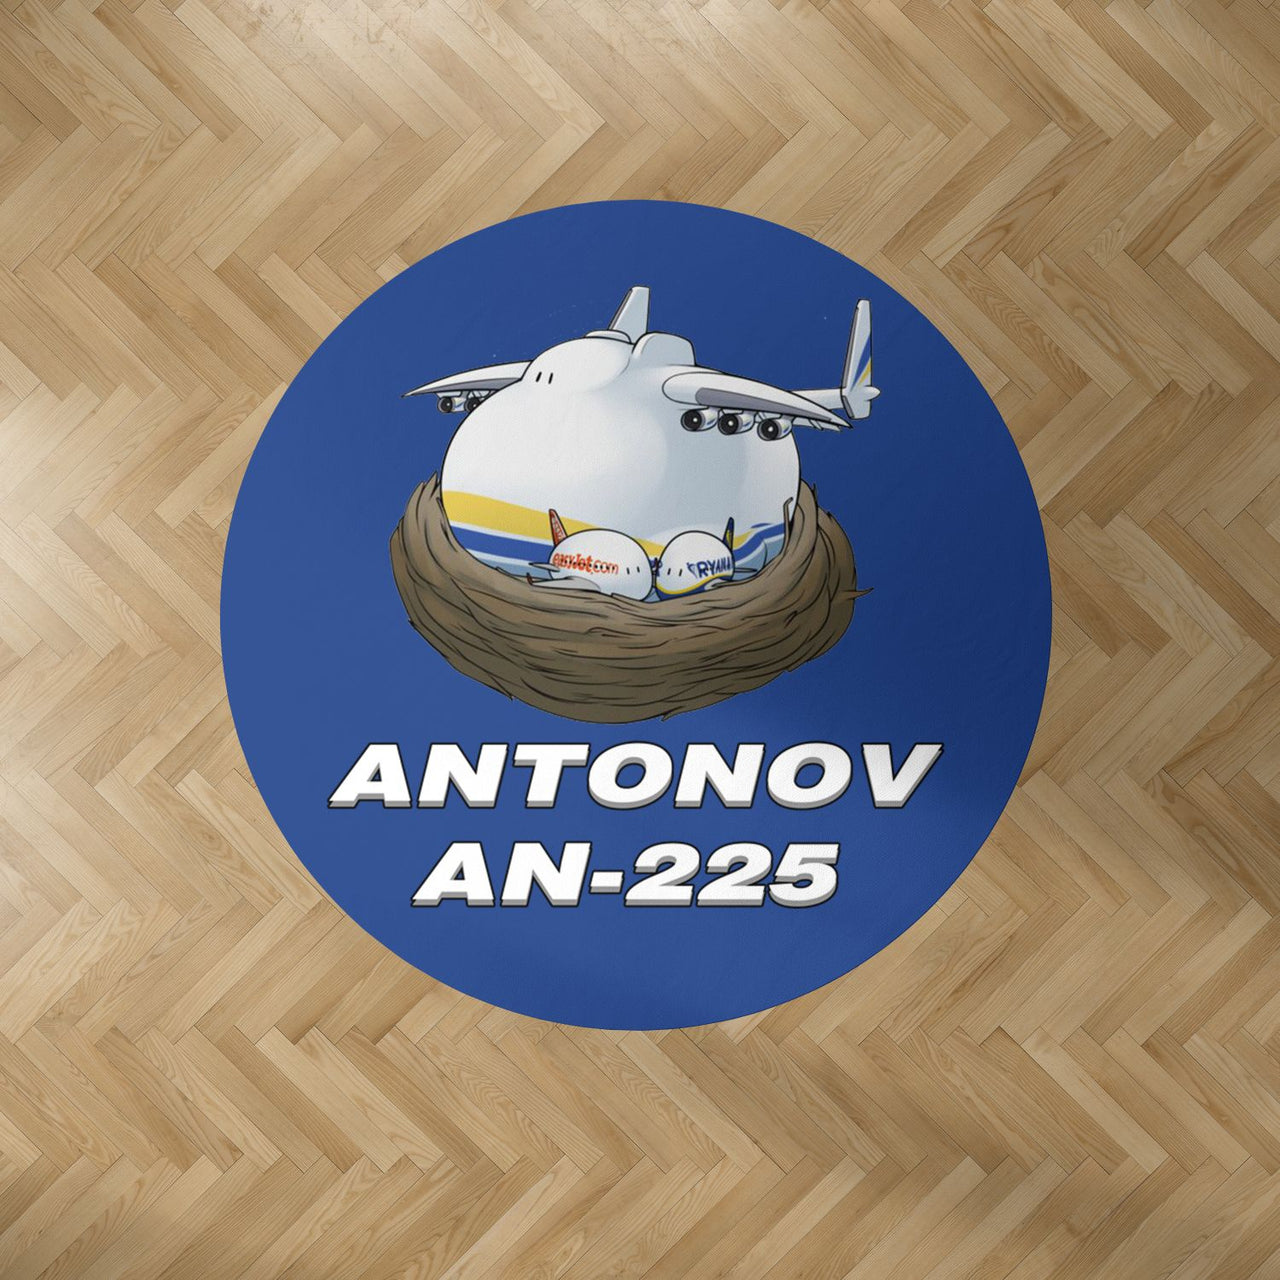 Antonov AN-225 (22) Designed Carpet & Floor Mats (Round)